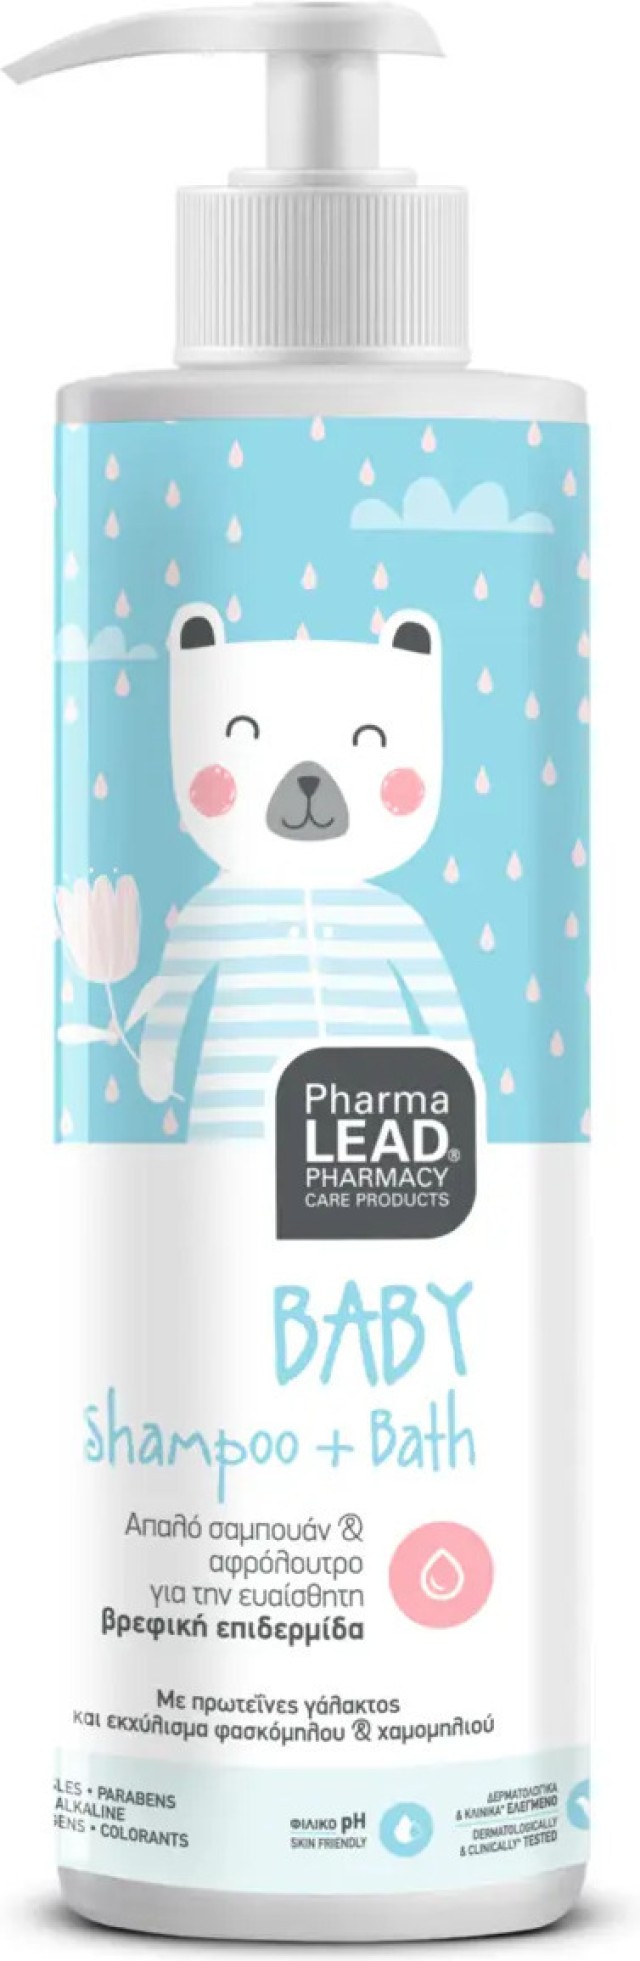 PharmaLead Baby Shampoo & Bath, Απαλό Βρεφικό Σαμπουάν & Αφρόλουτρο 500ml